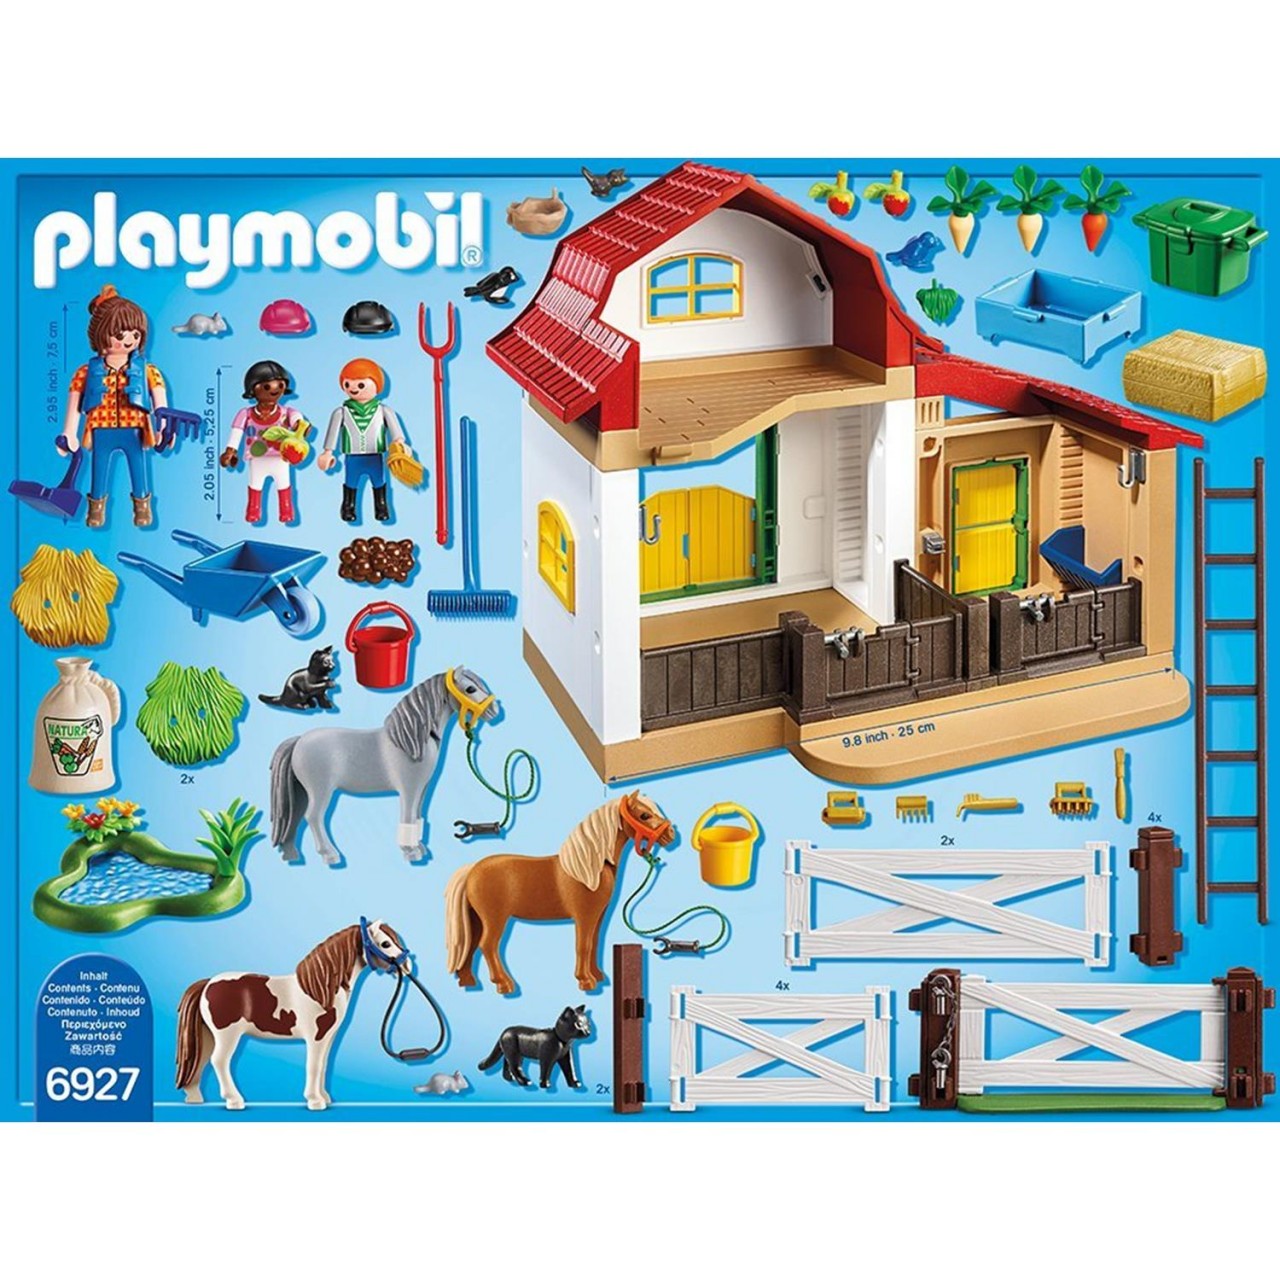 Playmobil 6927 Ponyhof